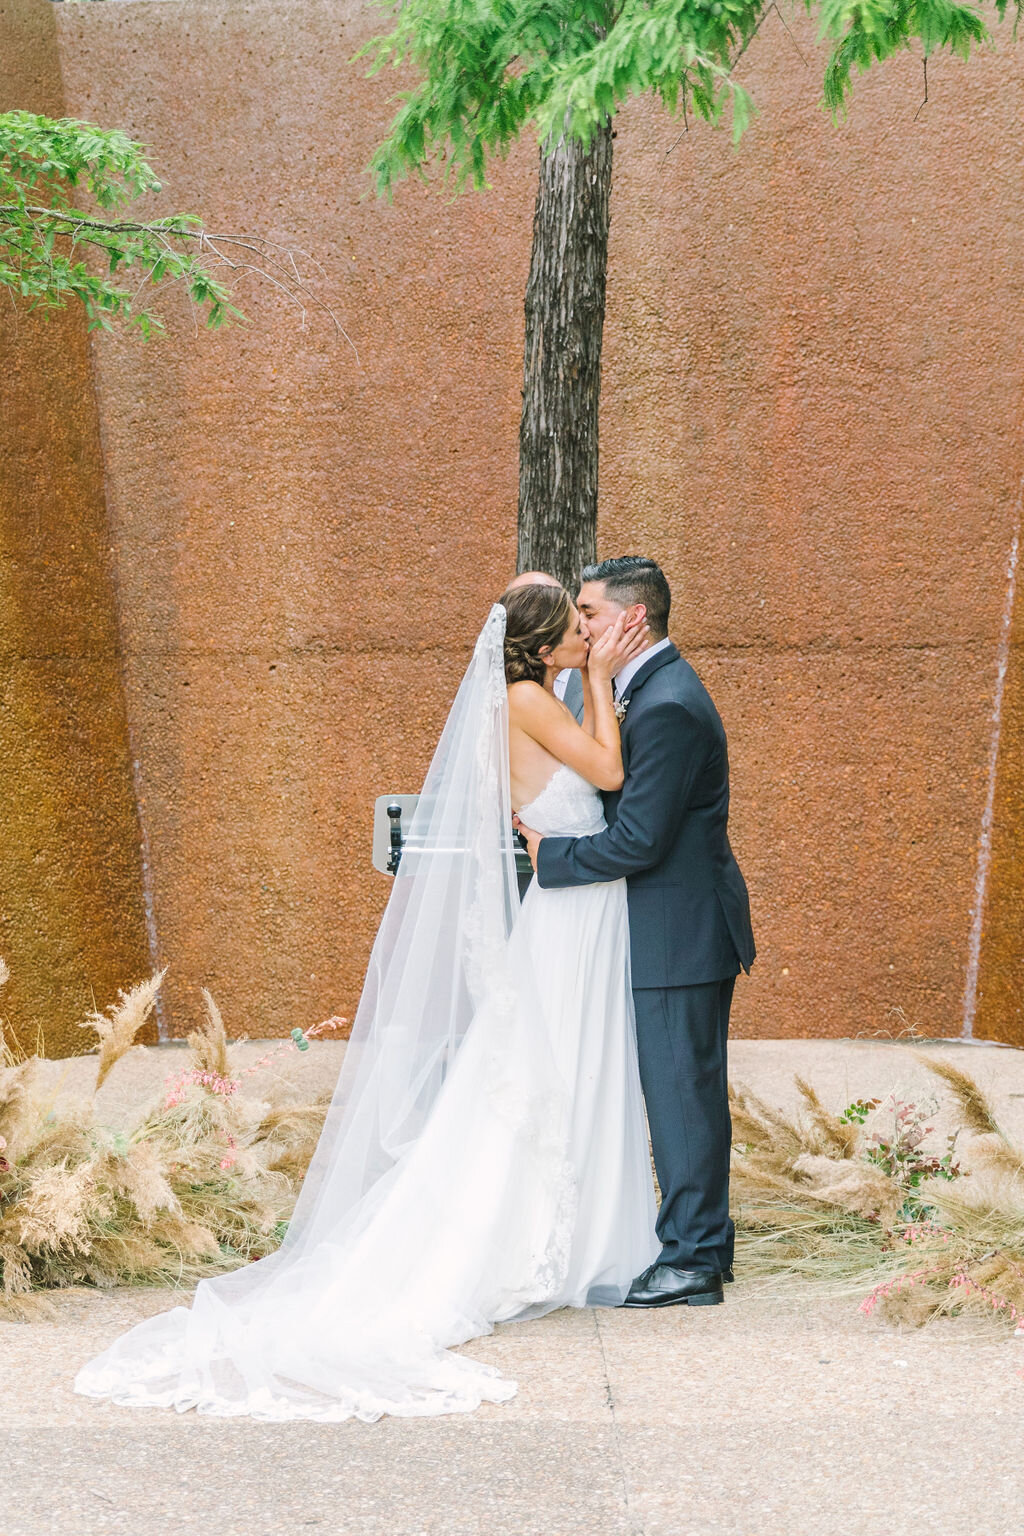 Ellen-Ashton-Photography-Dallas-Wedding-Photographers-Girt-and-gold-events-weddings116.jpg